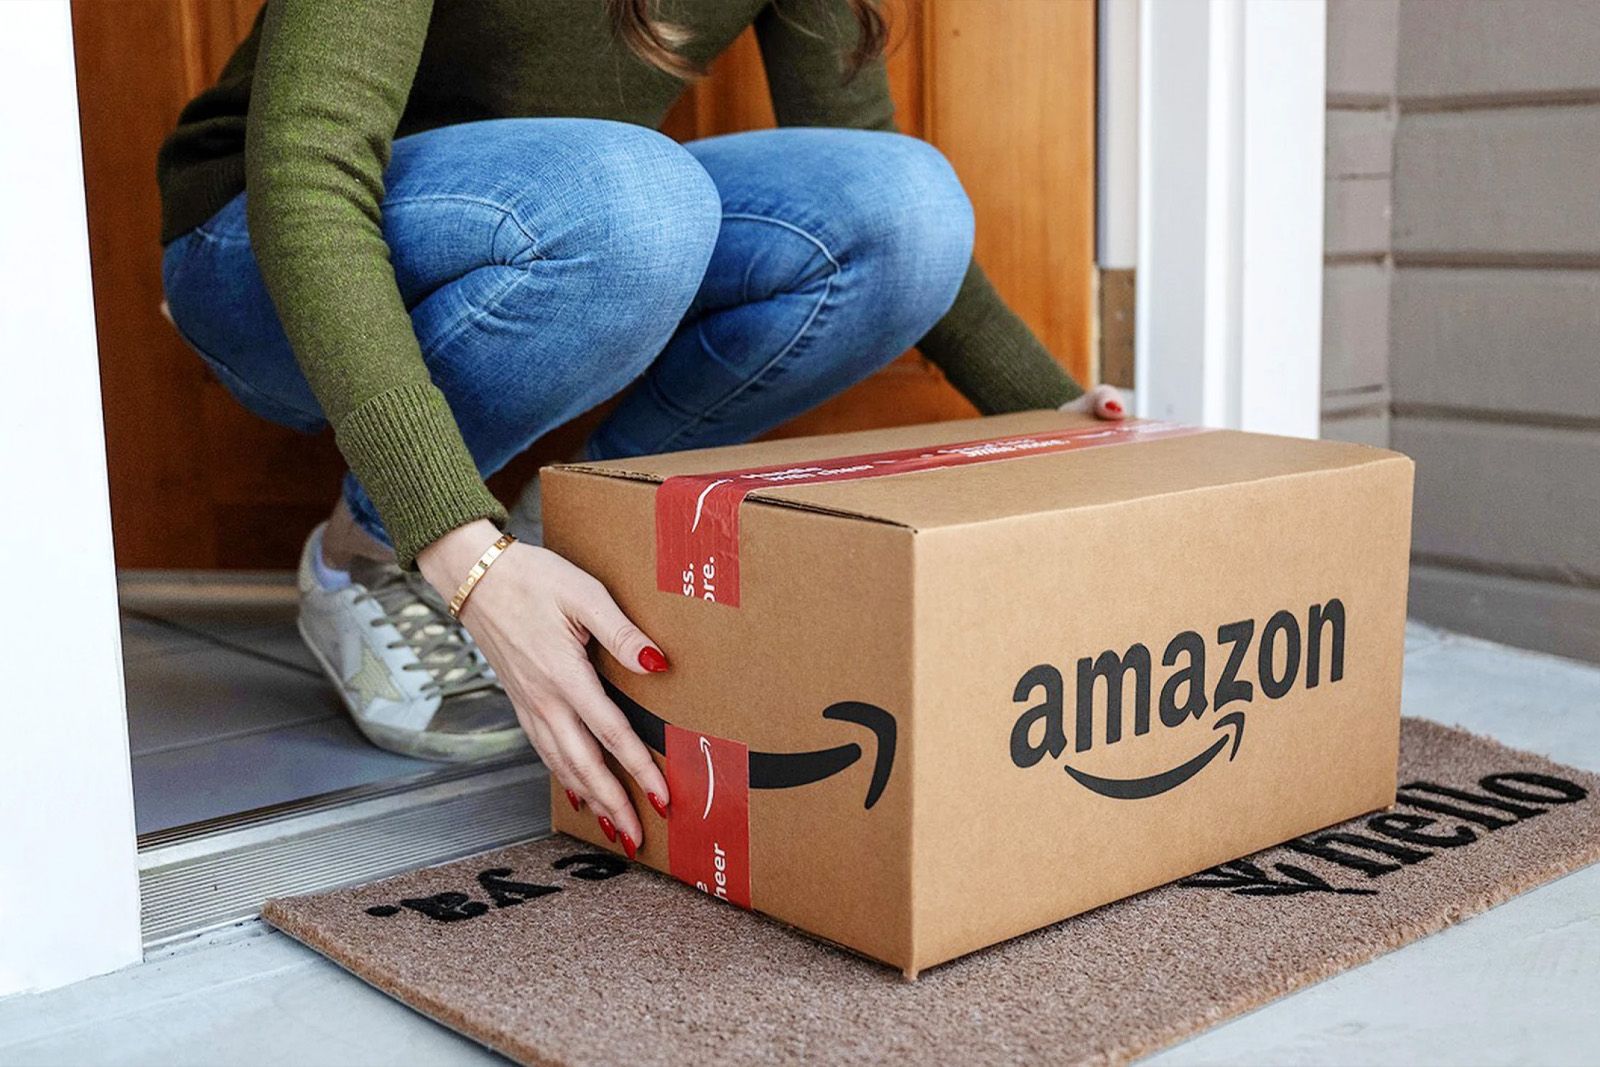 Amazon Prime package doorstep